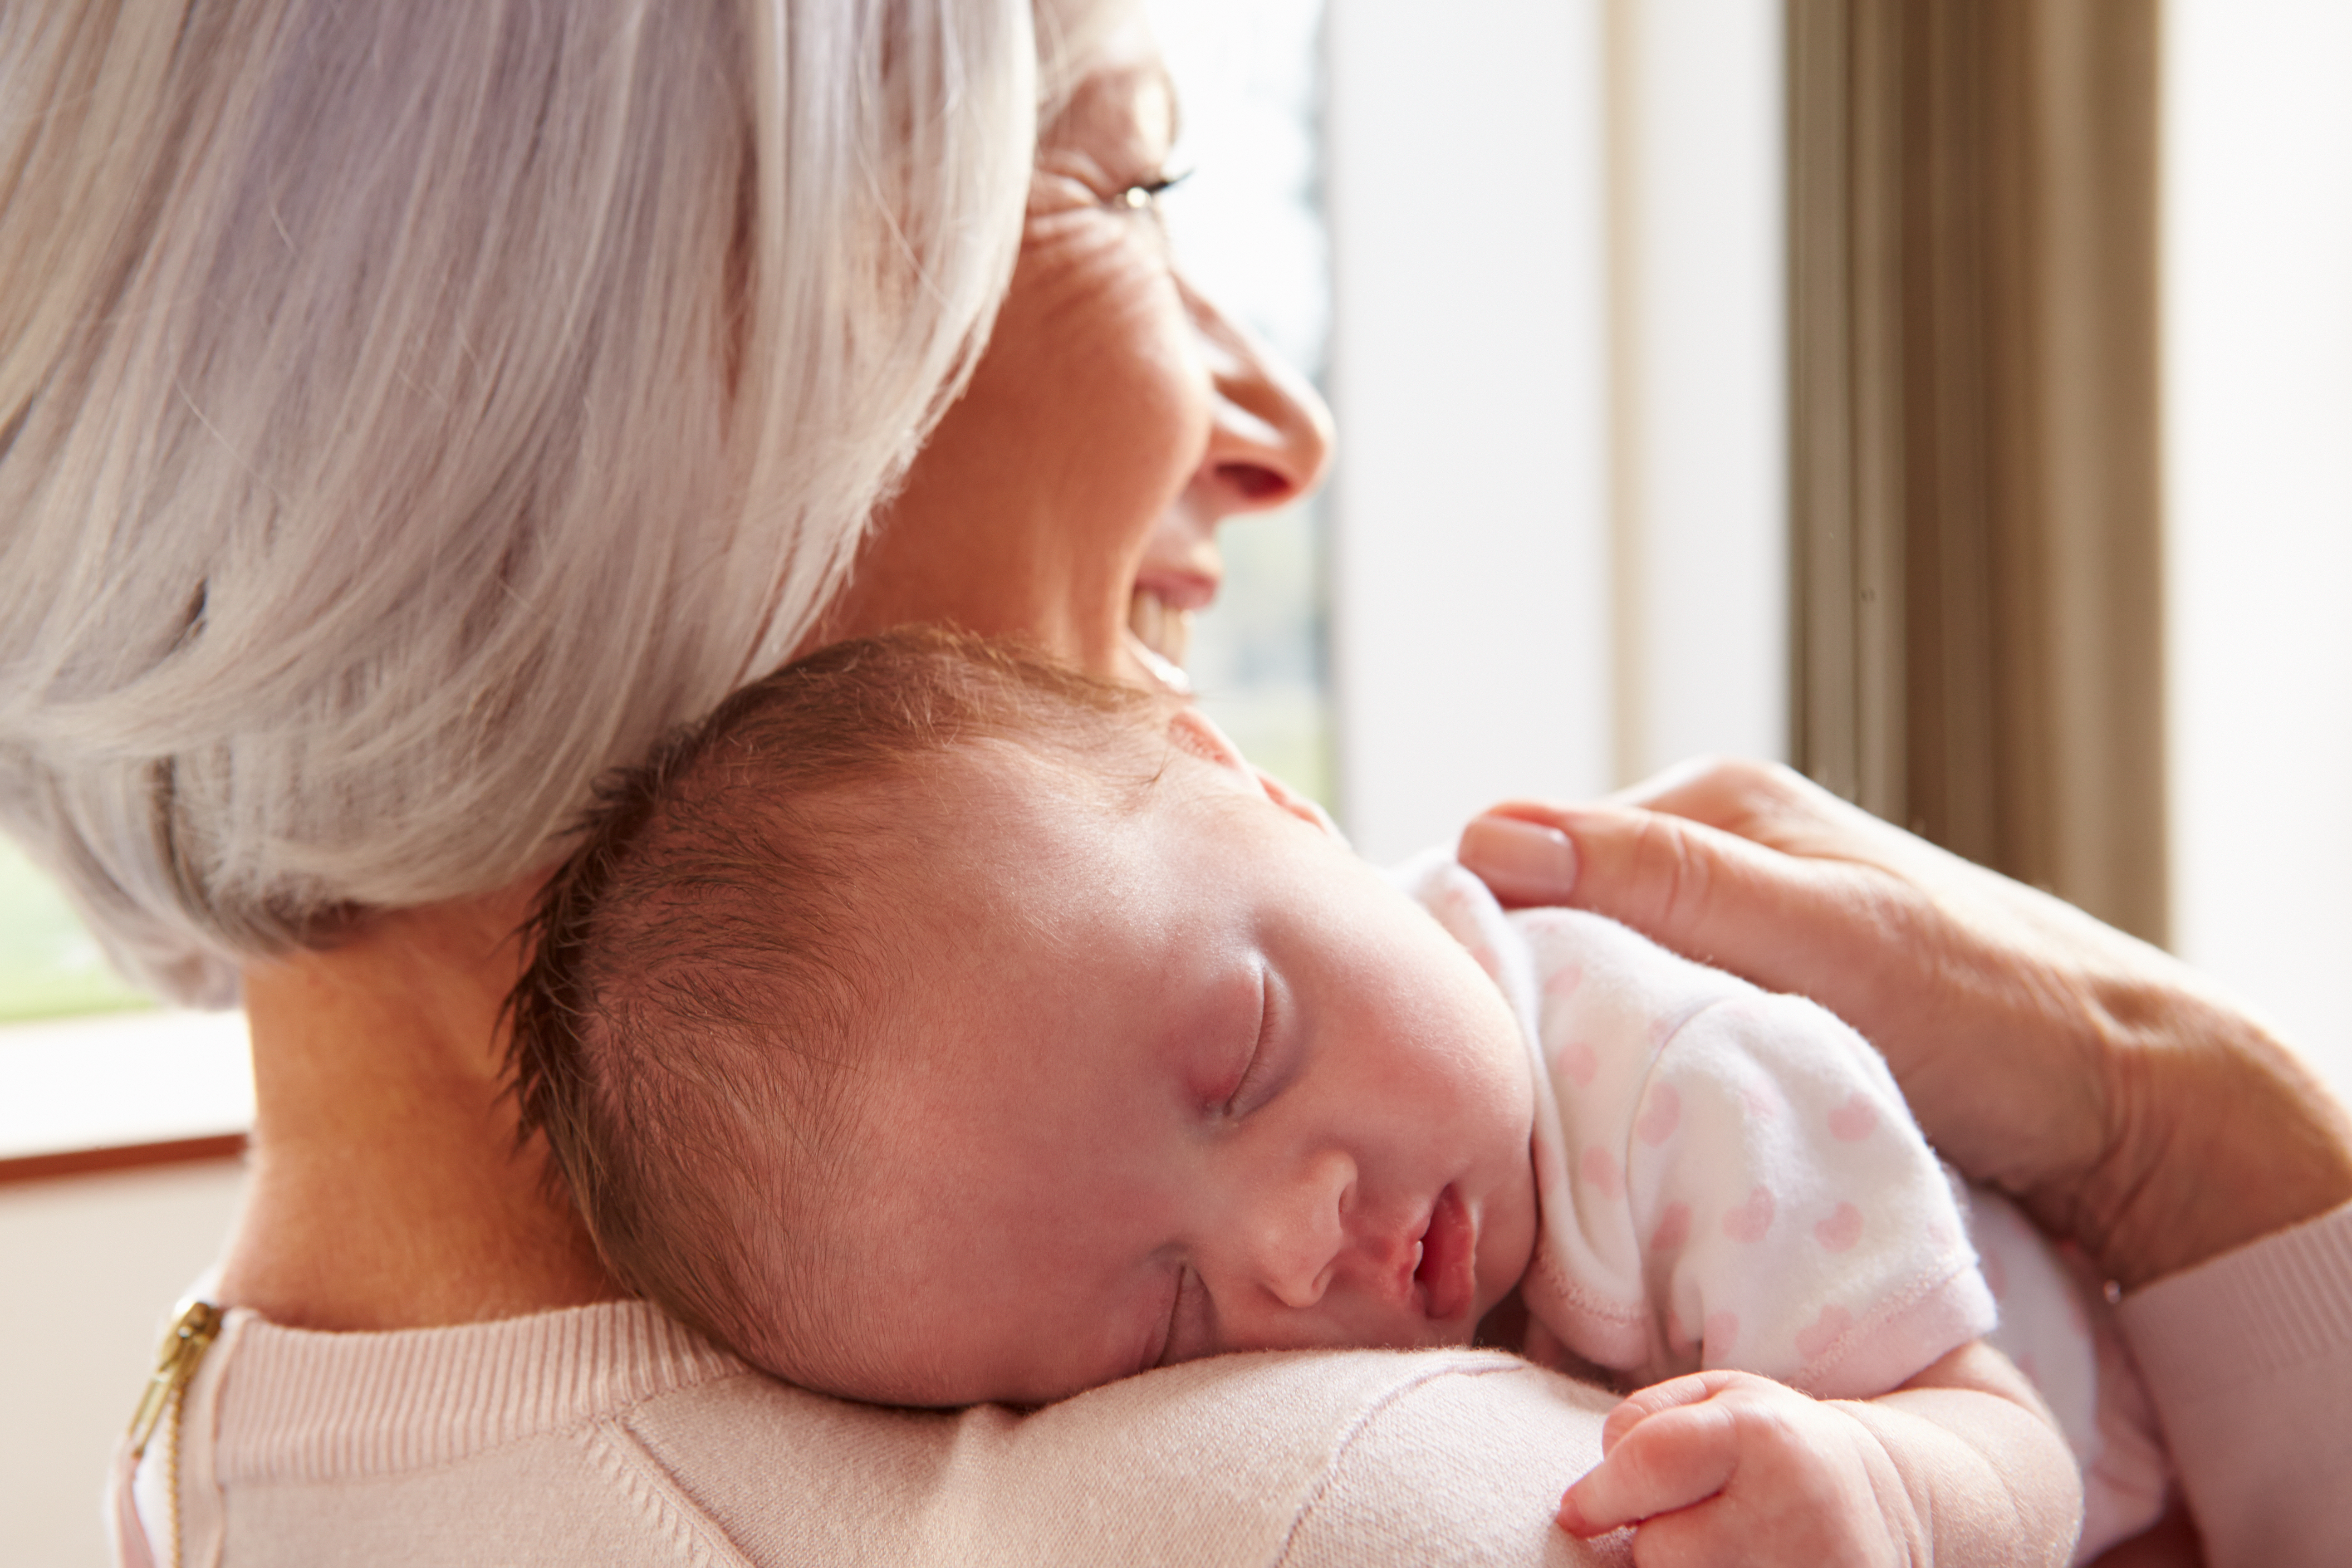 A grandmother holding her newborn grandchild | Source: Shutterstock